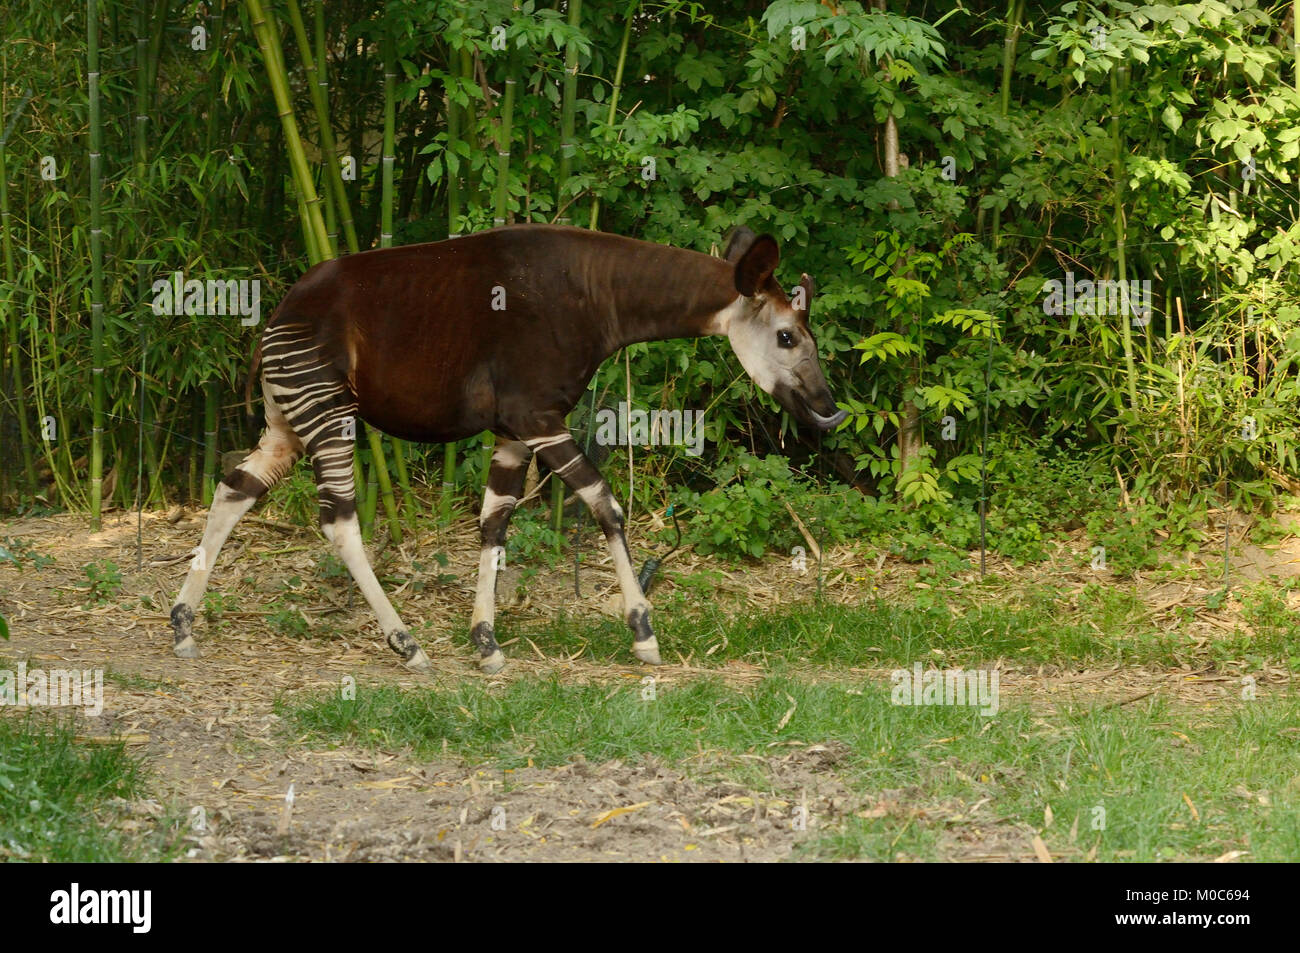 Okapi Okapia johnstoni Endangered Species Captive Stockfoto